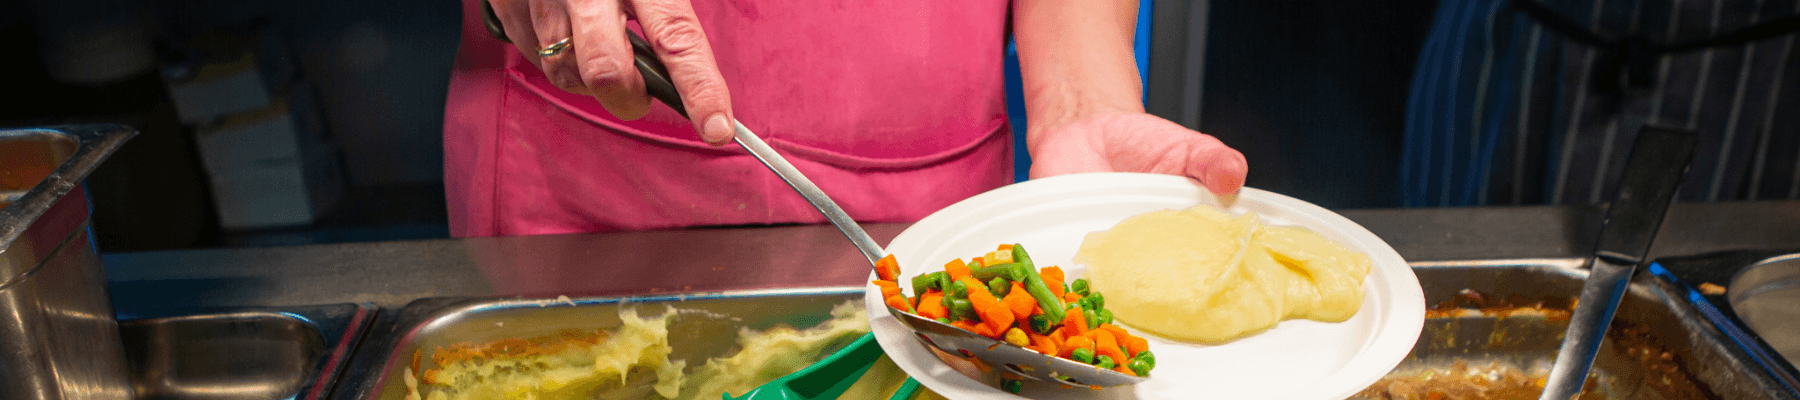 hands serving food - solve homelessness